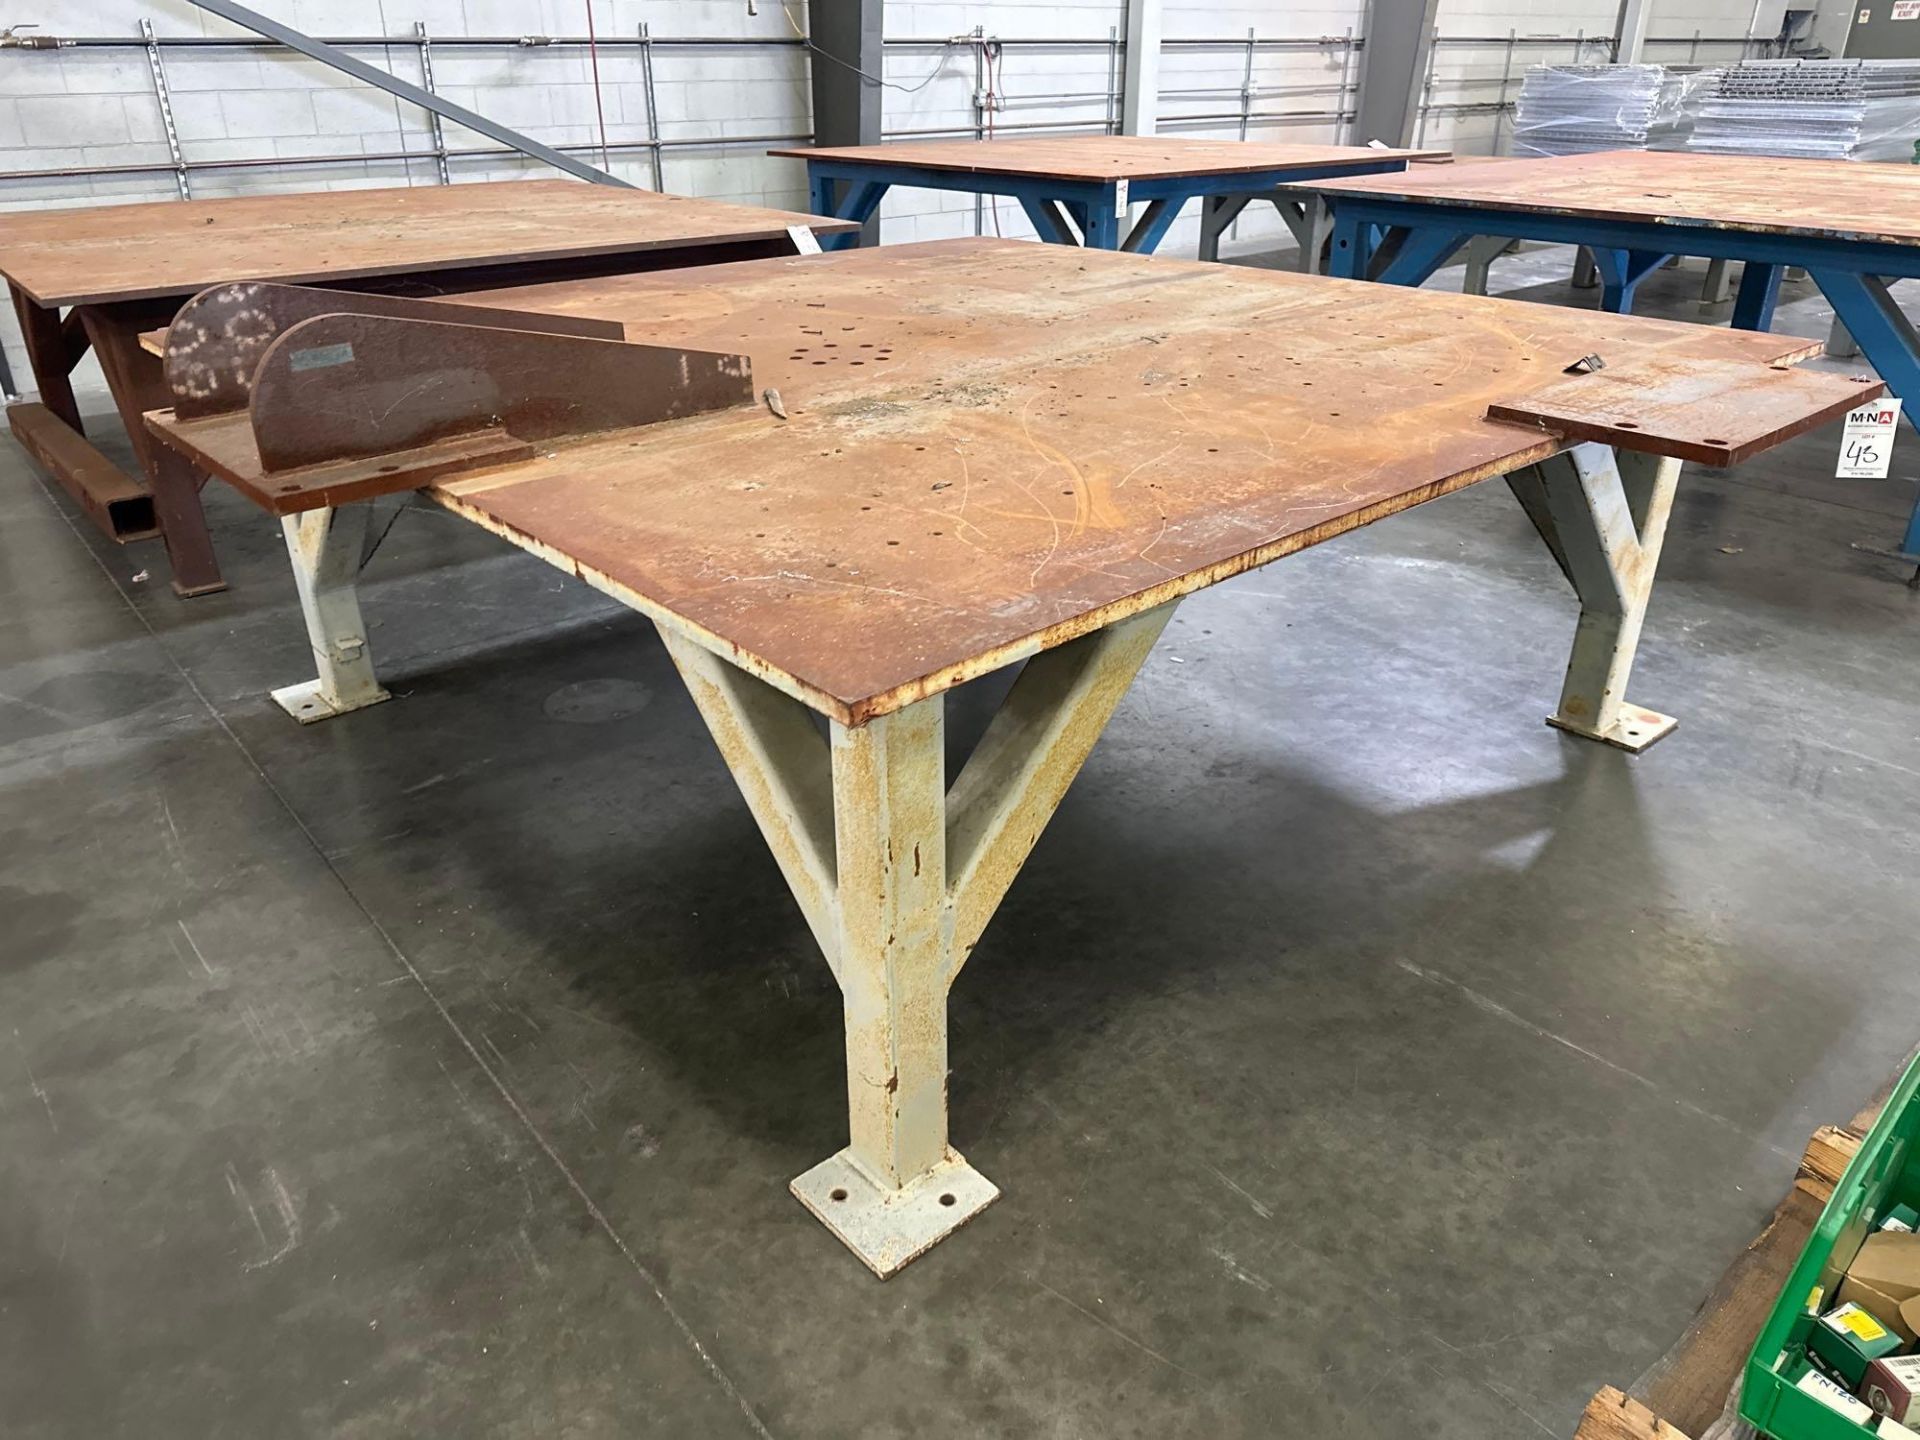 96”L x 96”W x 34”H Steel Welding Table - Image 2 of 5